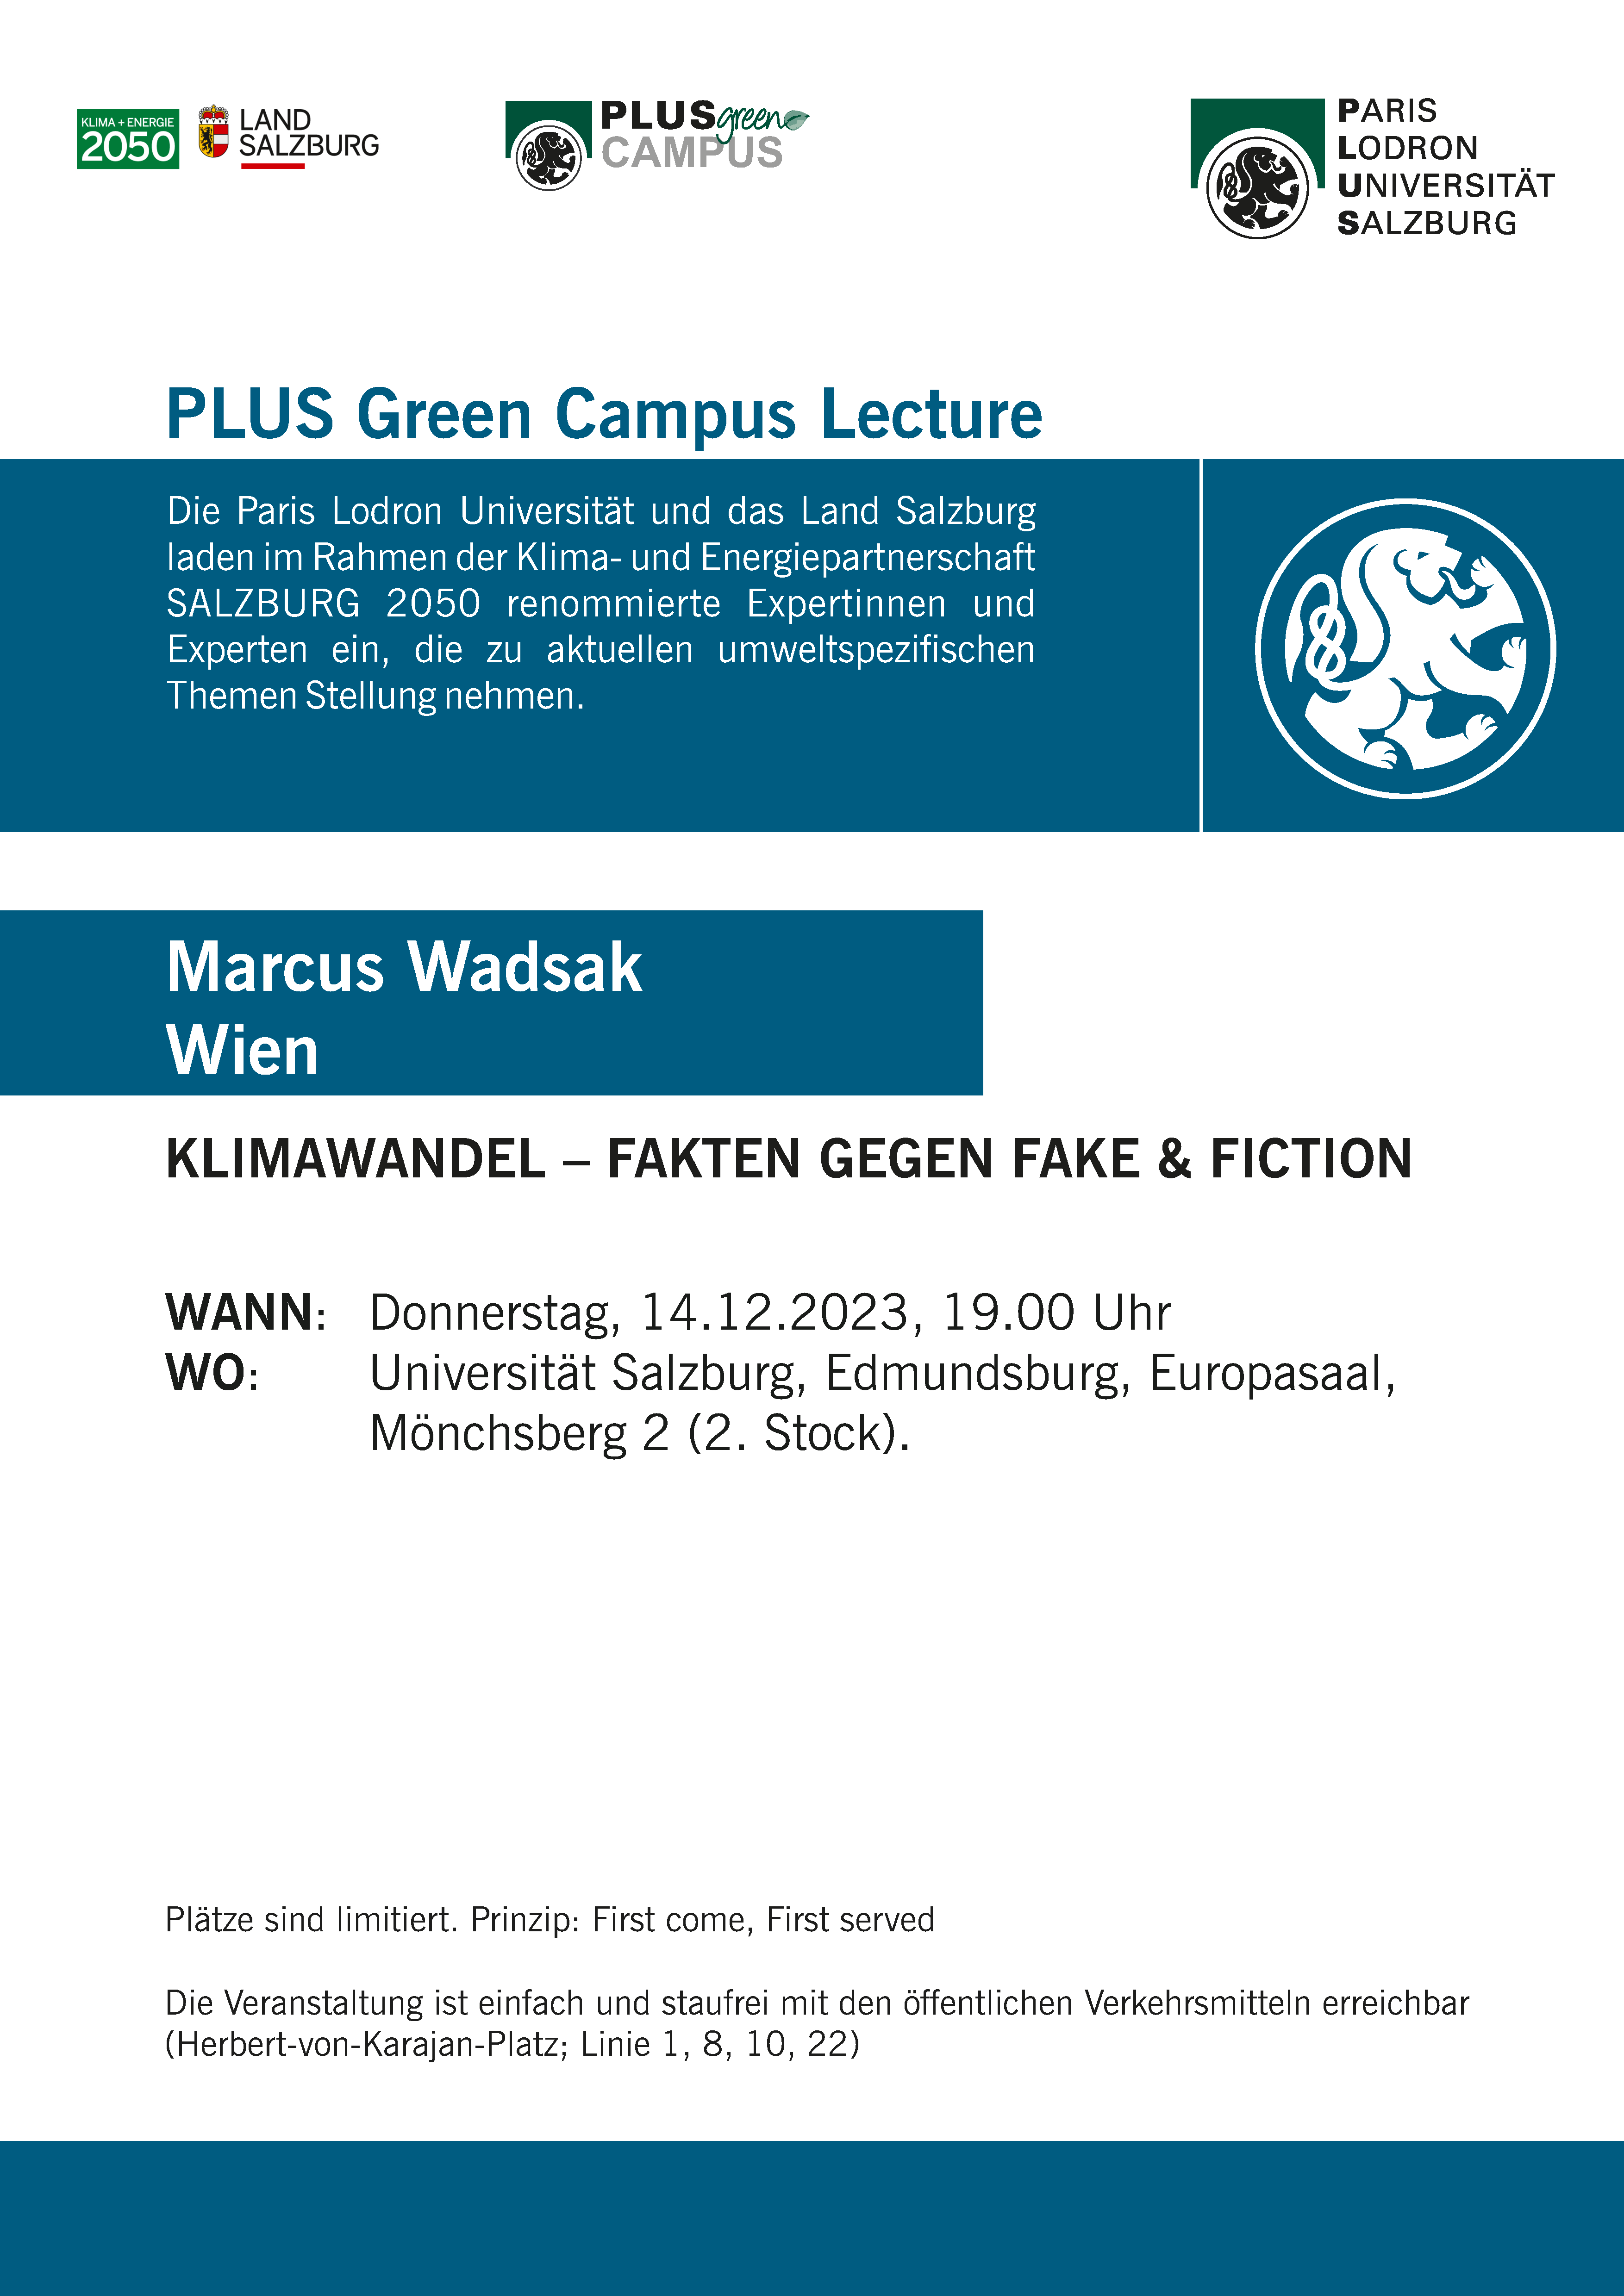 Flyer der PLUS Green Campus Lecture